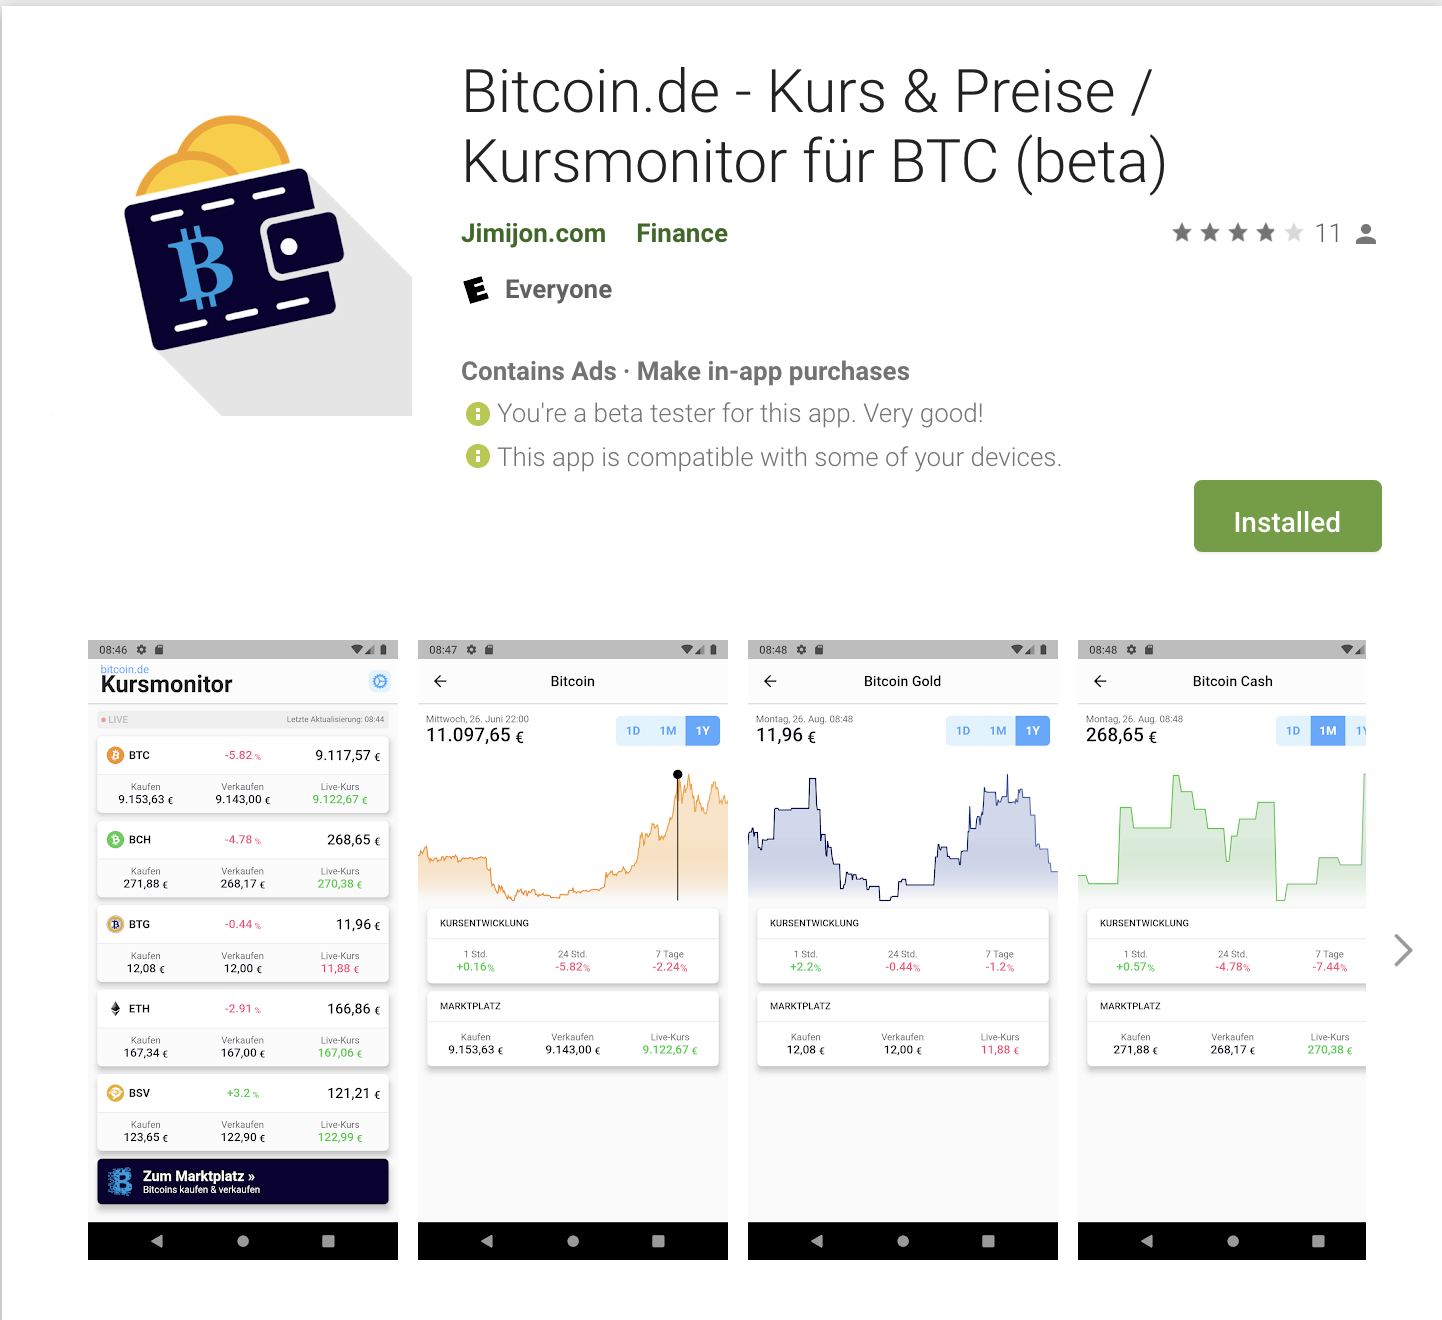 Bitcoin.de - Kurs & Preise / Kursmonitor für BTC